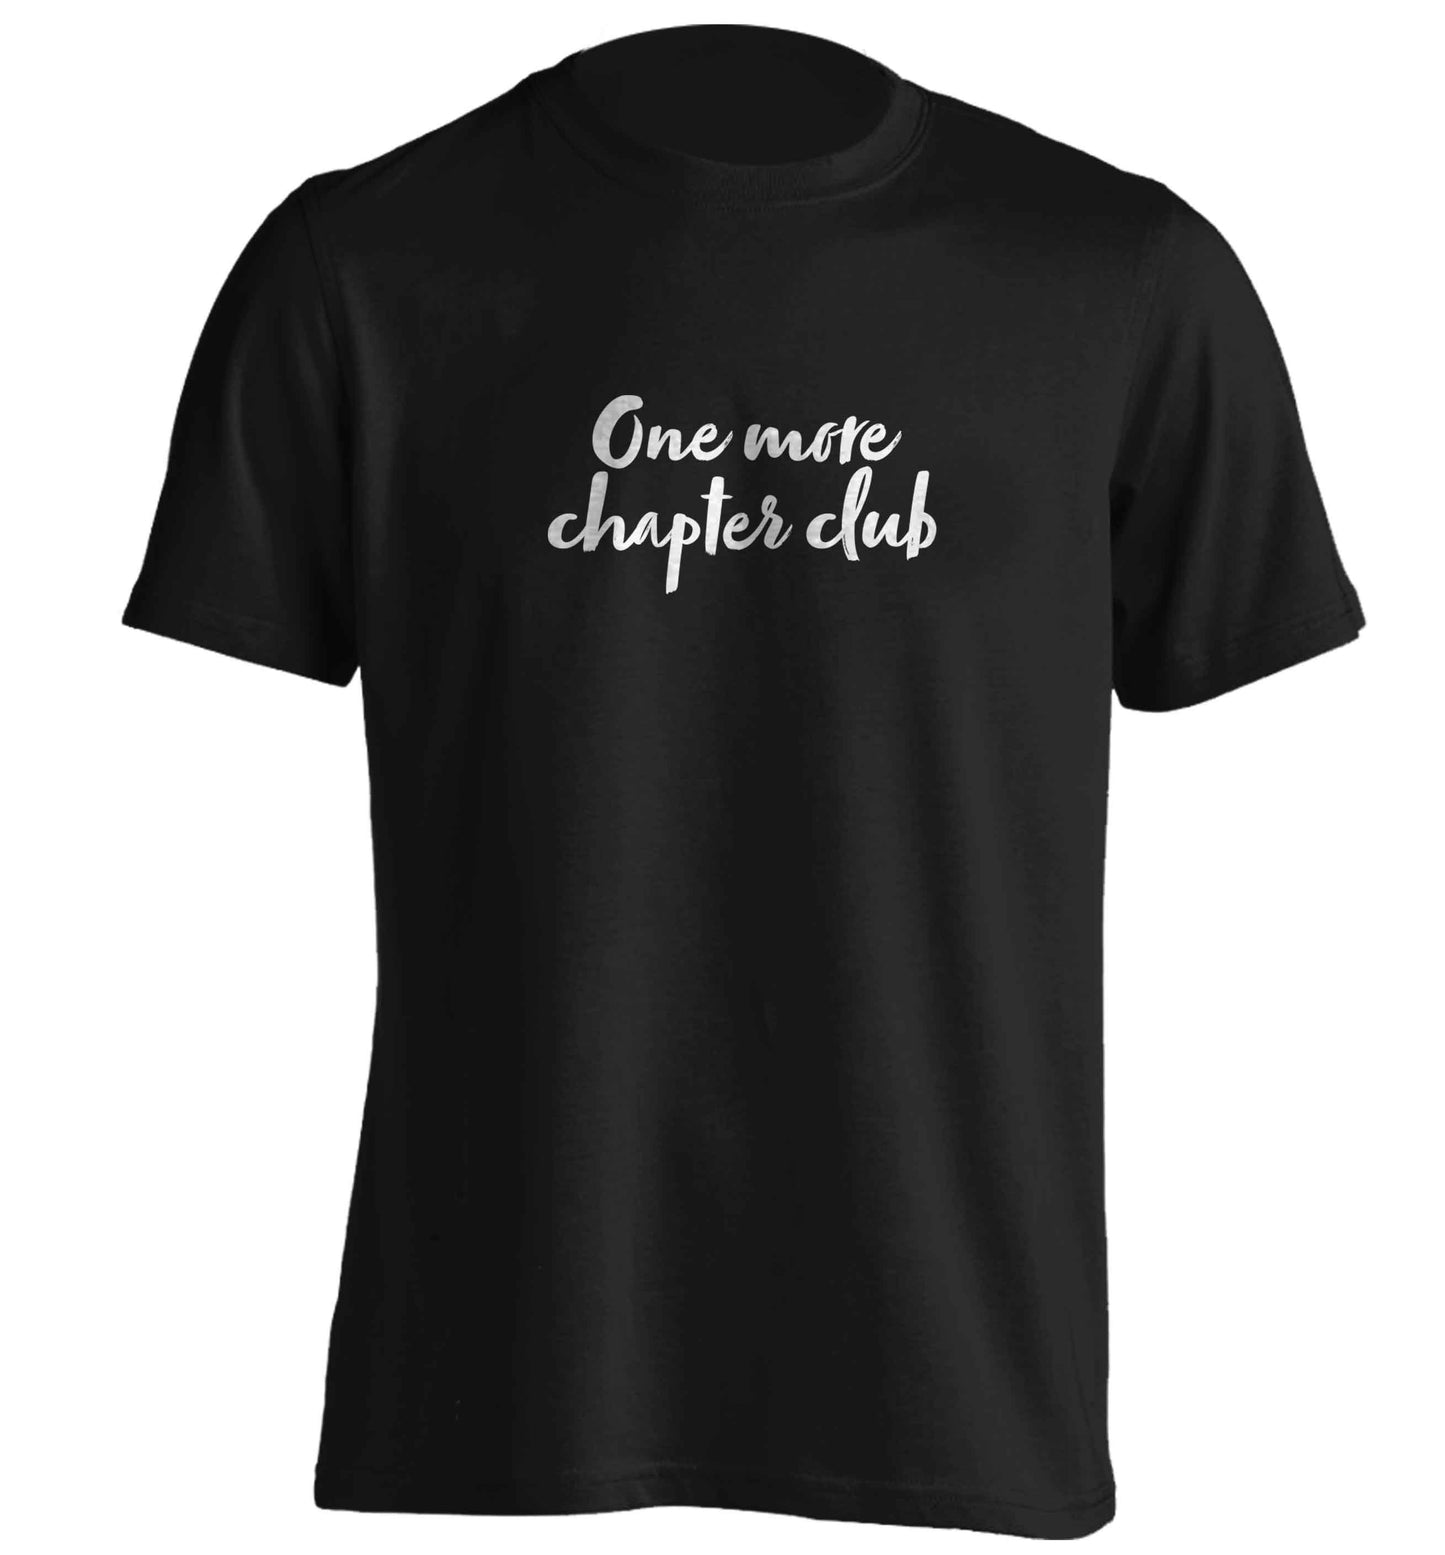 One more chapter club Kit adults unisex black Tshirt 2XL